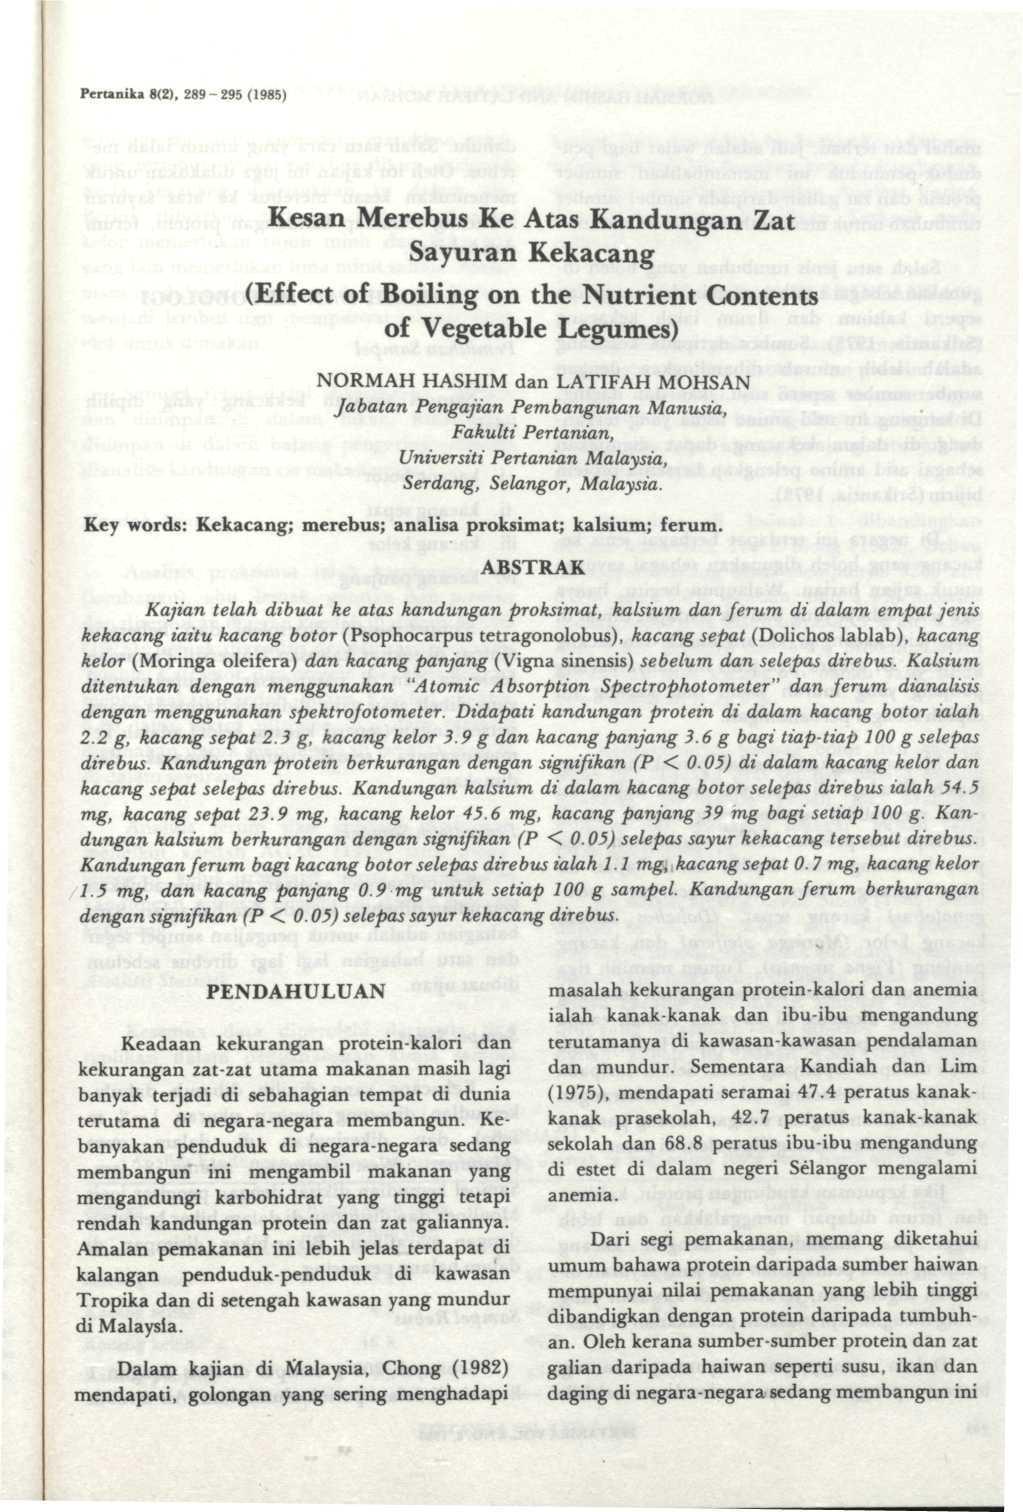 Perunika 8(2), 289-295 (1985) Kesan Merebus Ke Atas Kandungan Zat Sayuran Kekacang (Effect of Boiling on the Nutrient Contents of Vegetable Legumes) NORMAH HASHIM dan LATIFAH MOHSAN Jabatan Pengajian